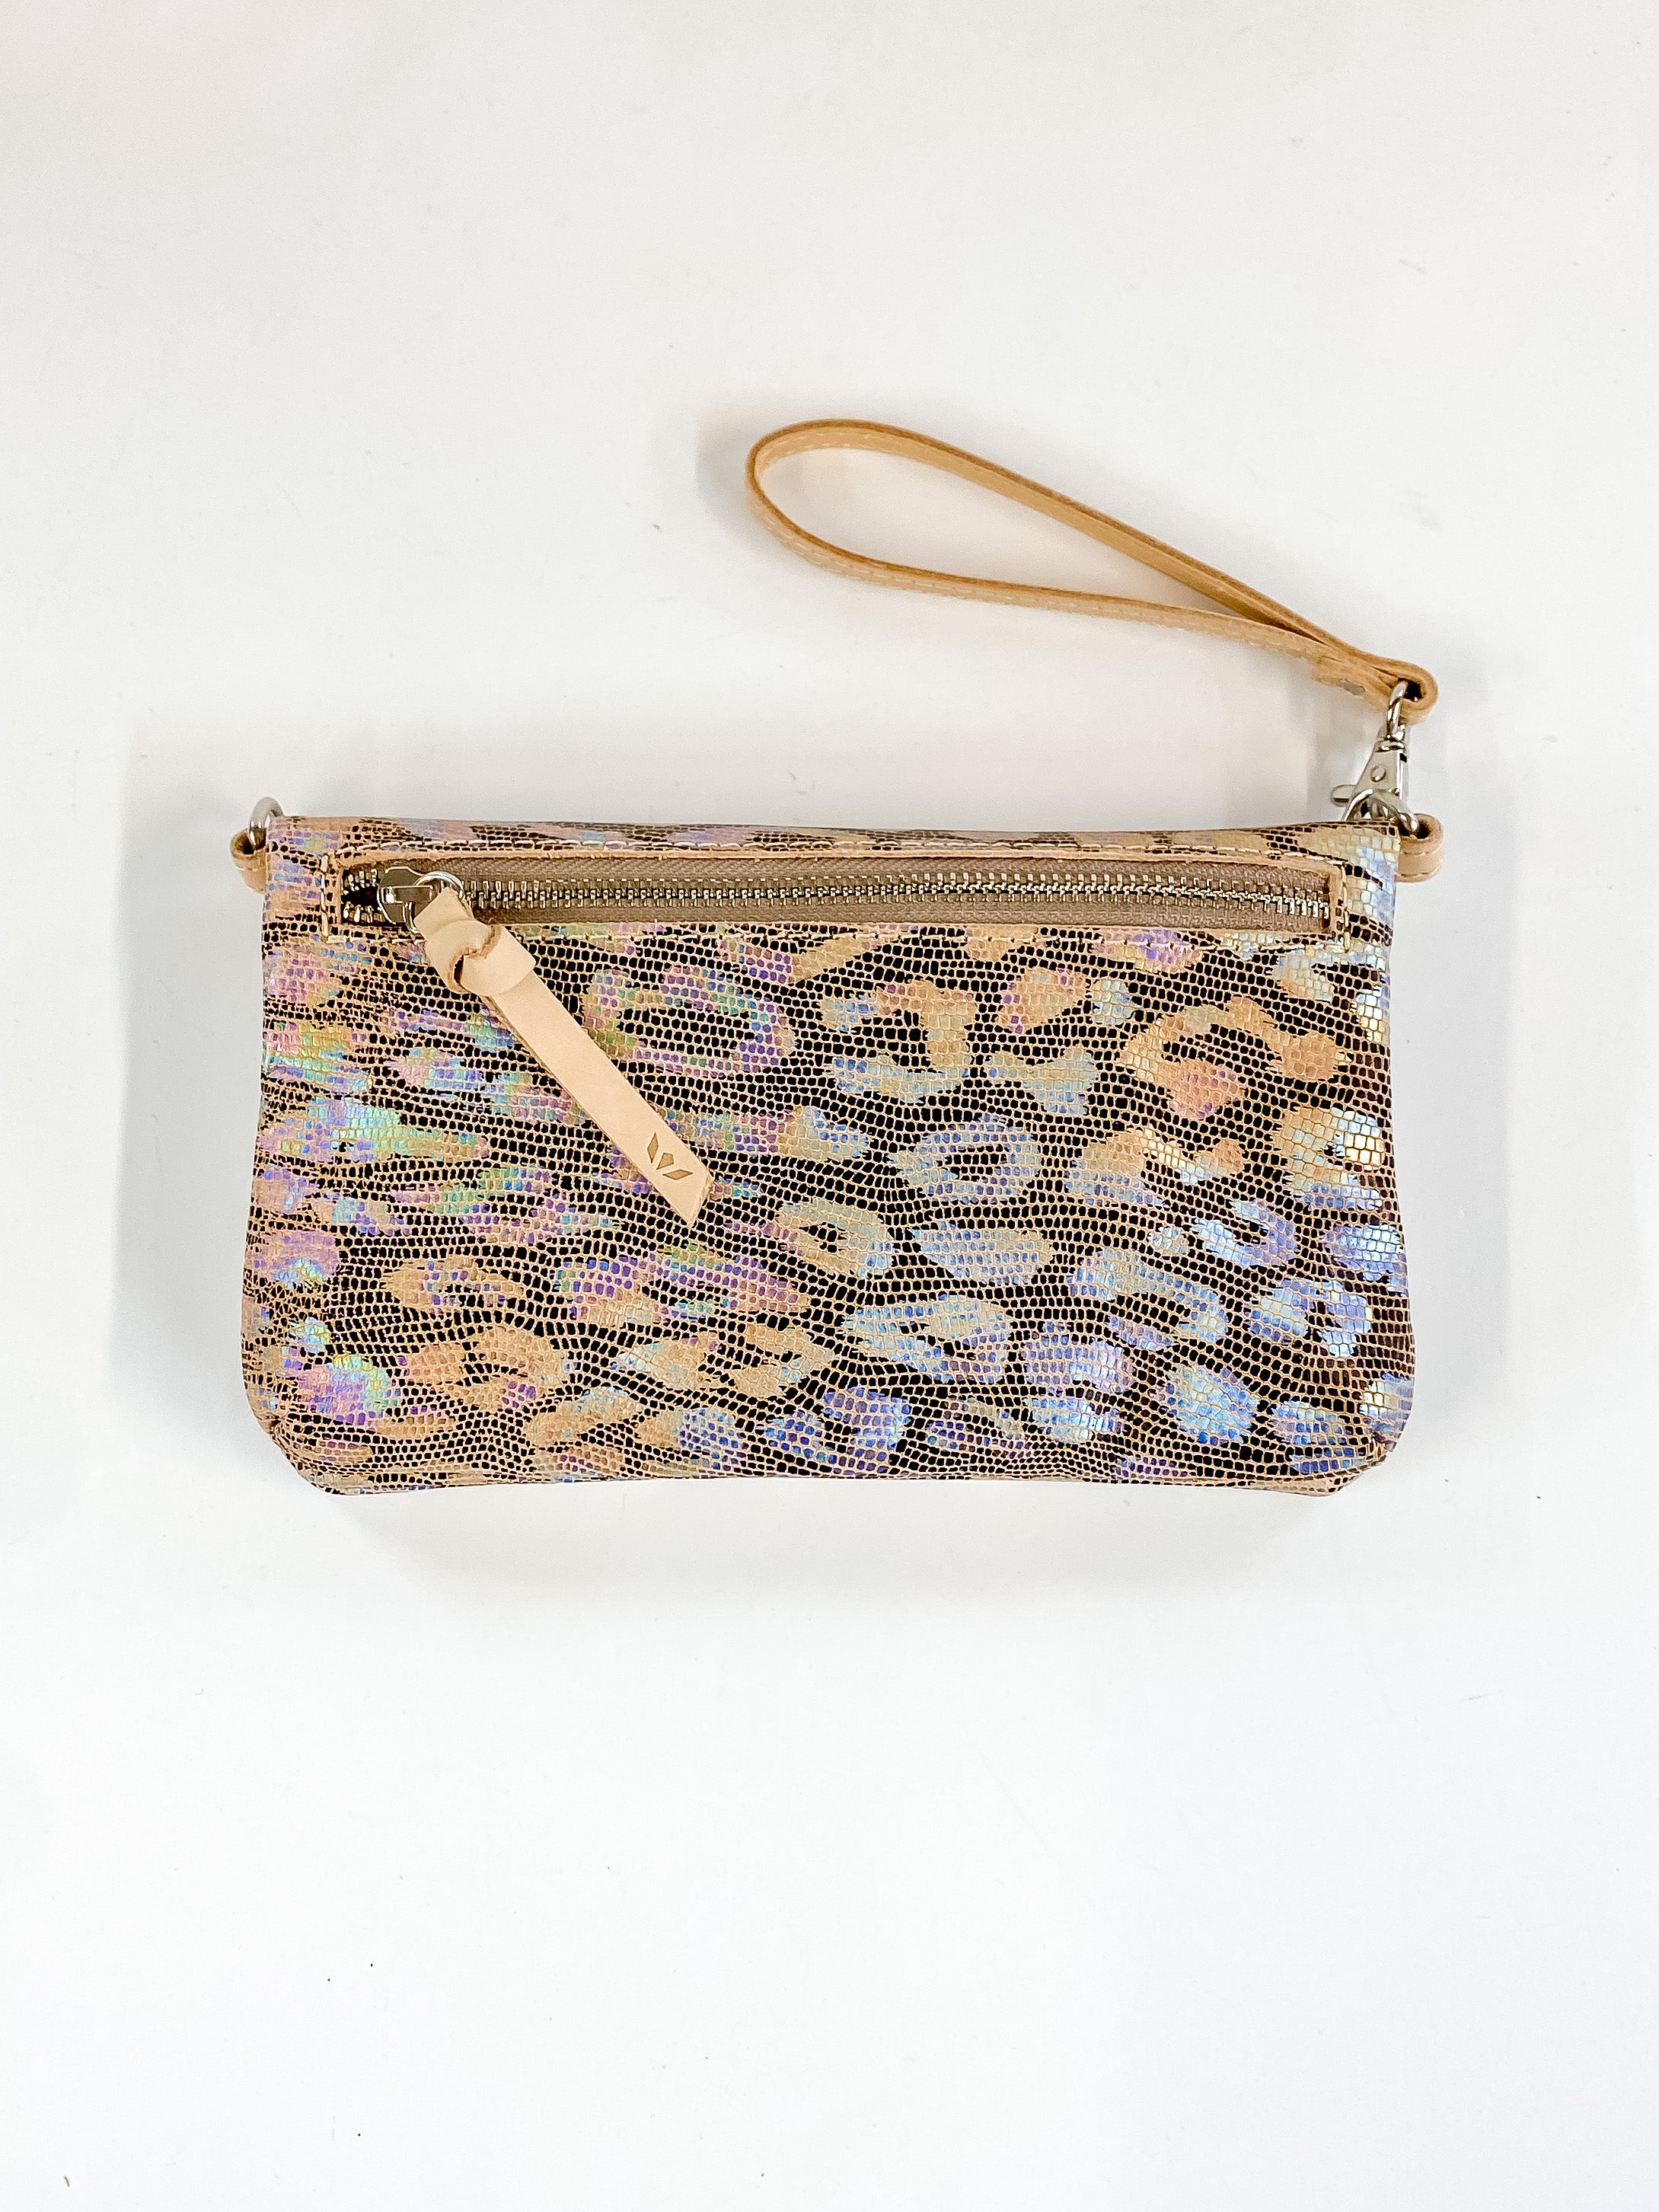 Consuela | Iris Uptown Crossbody Bag - Giddy Up Glamour Boutique